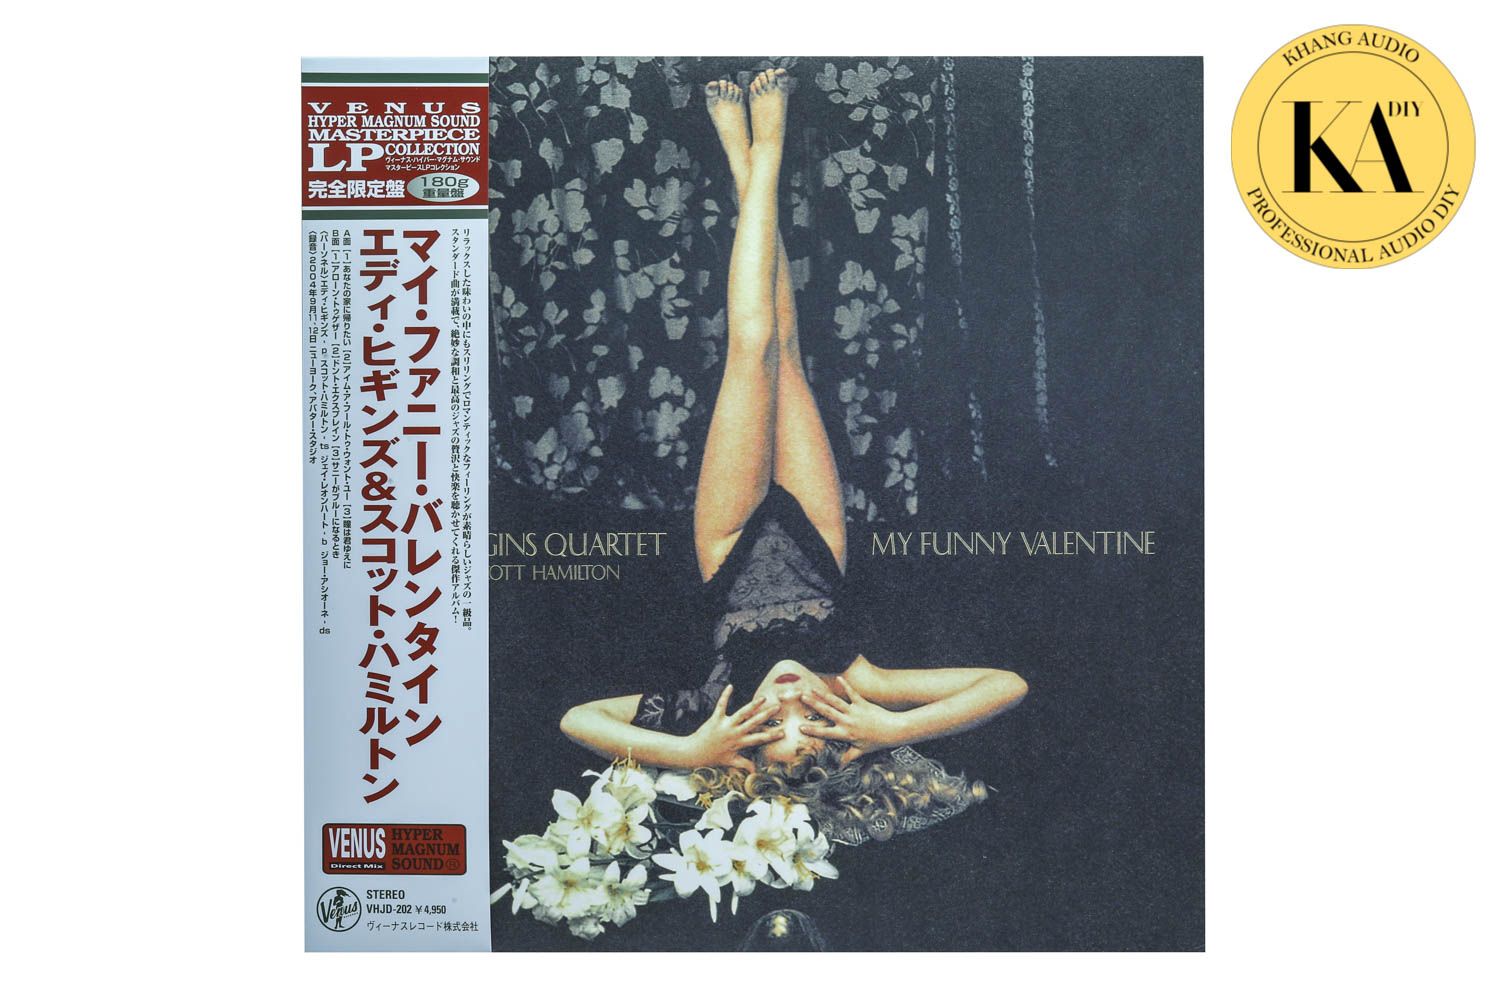 LP My Funny Valentine - Eddie Higgins Quartet featuring Scott Hamilton